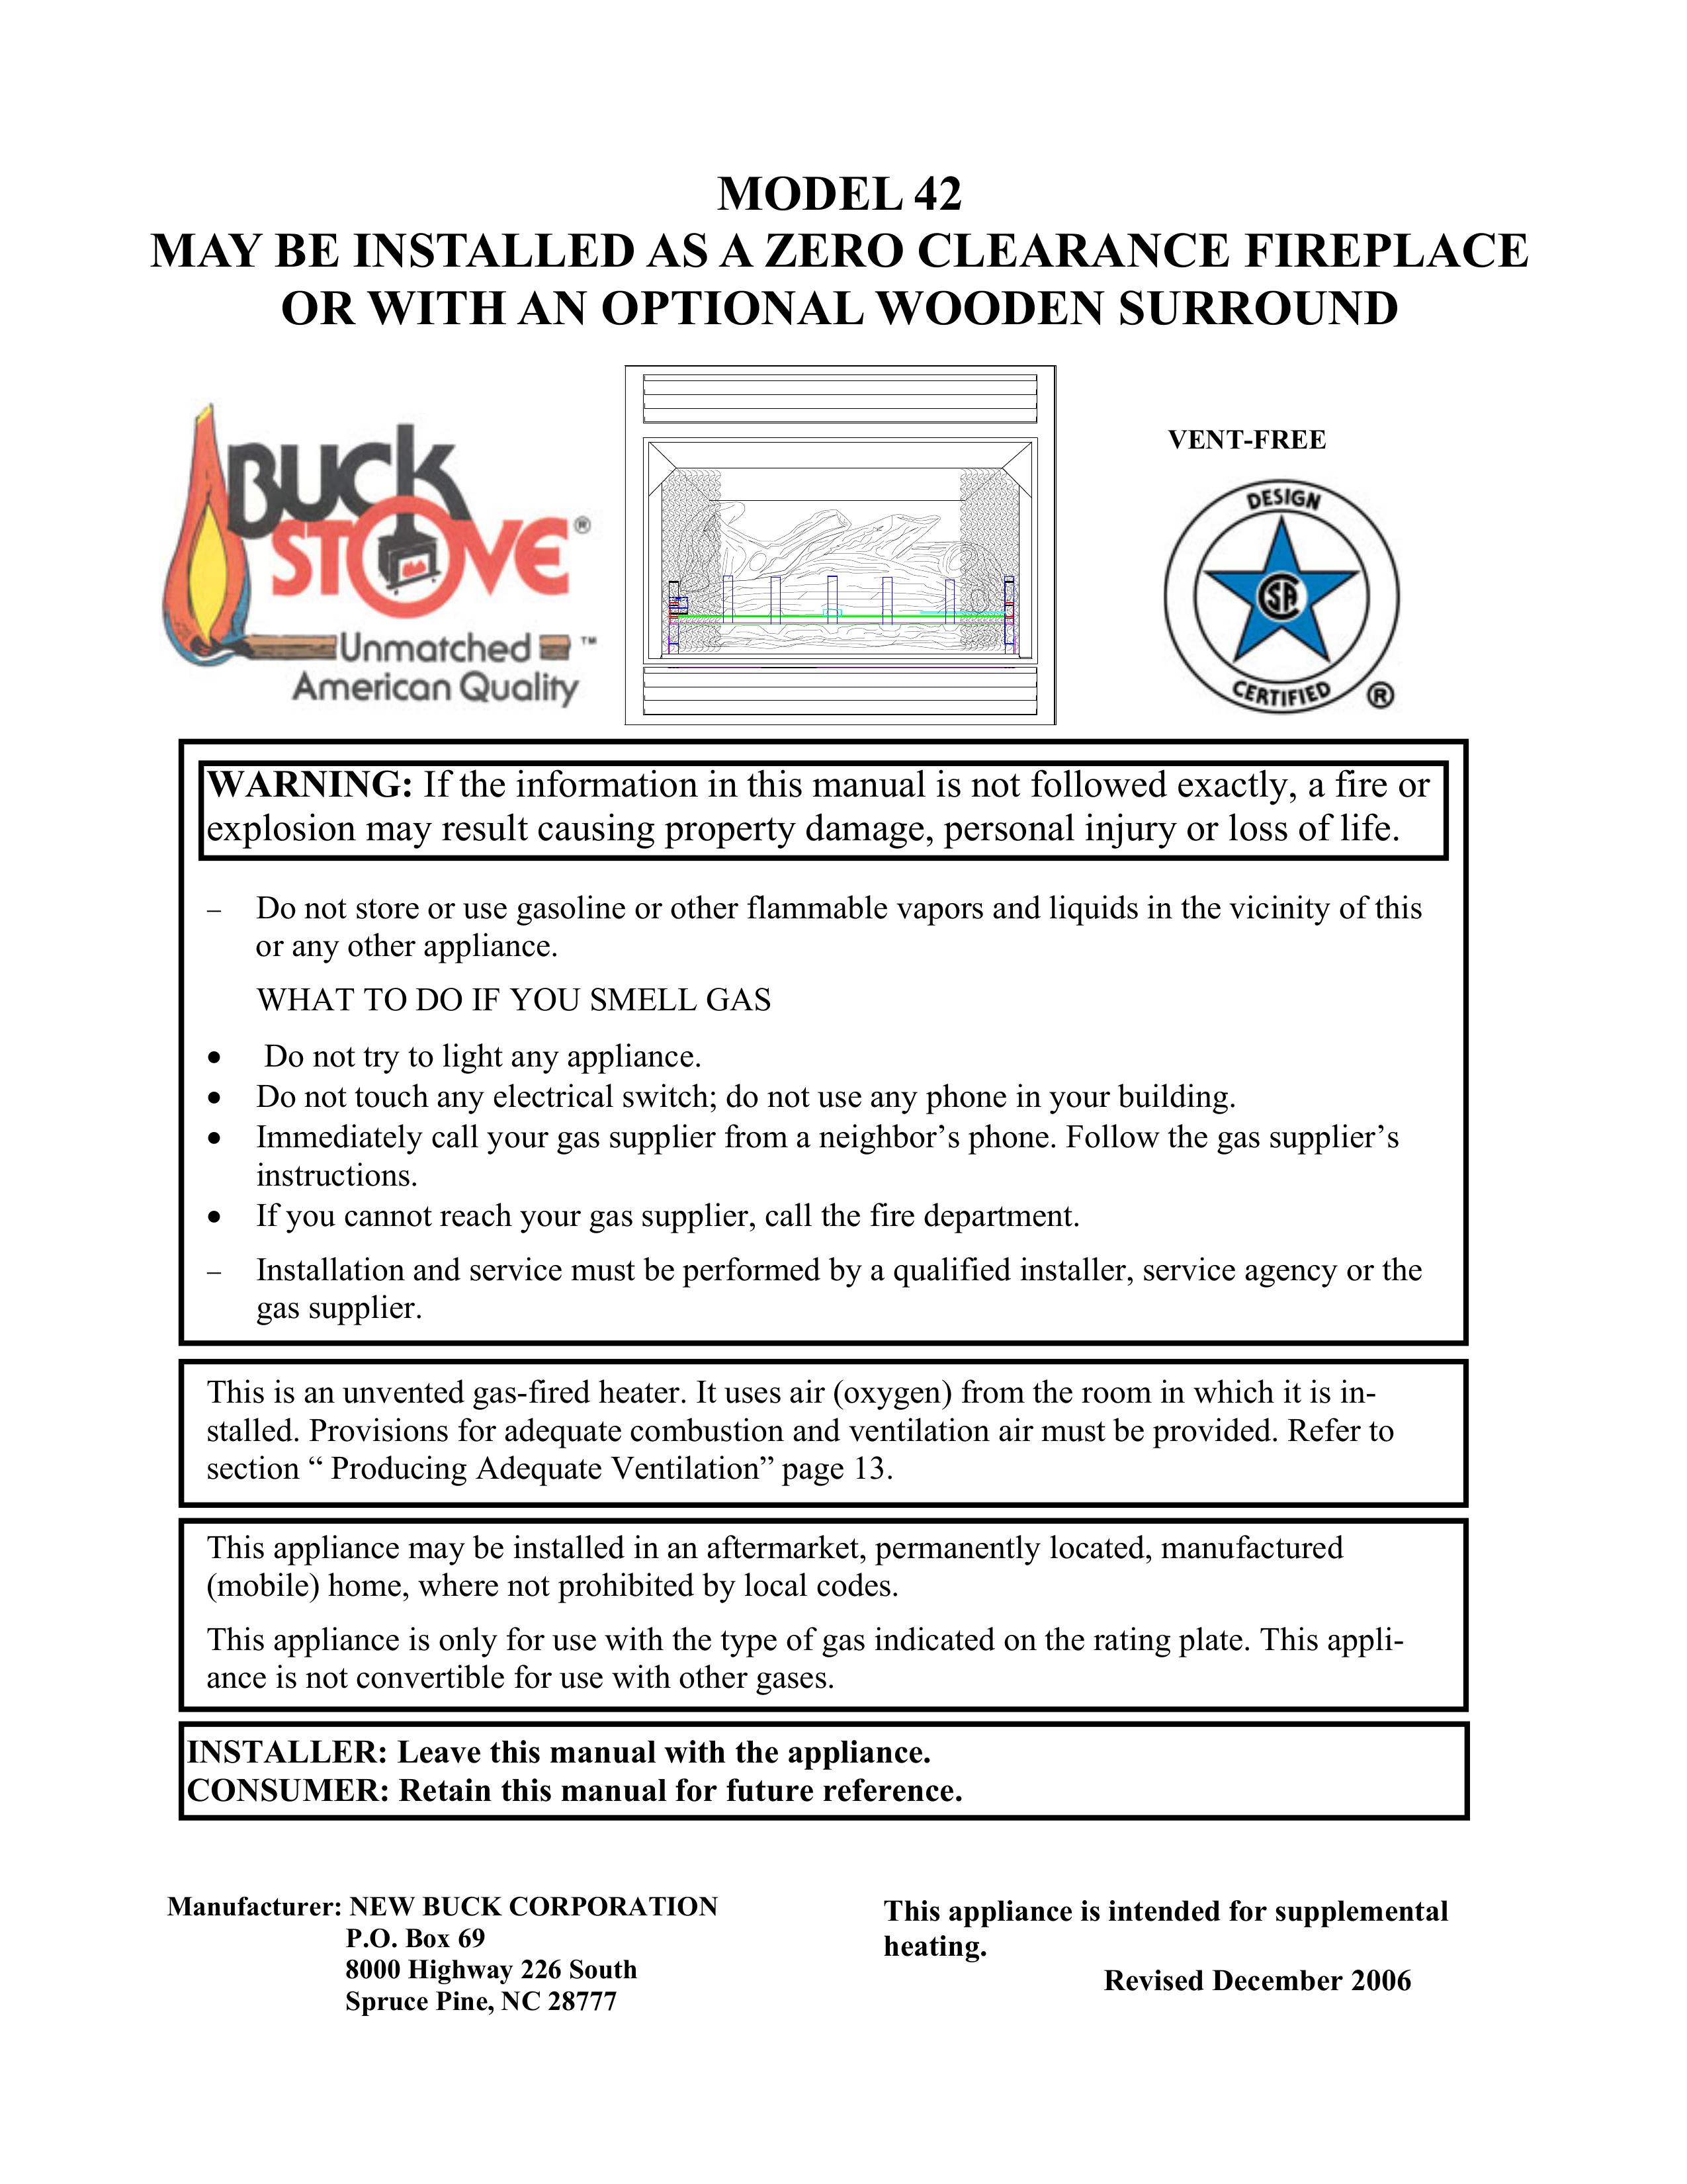 New Buck Corporation 42 Outdoor Fireplace User Manual